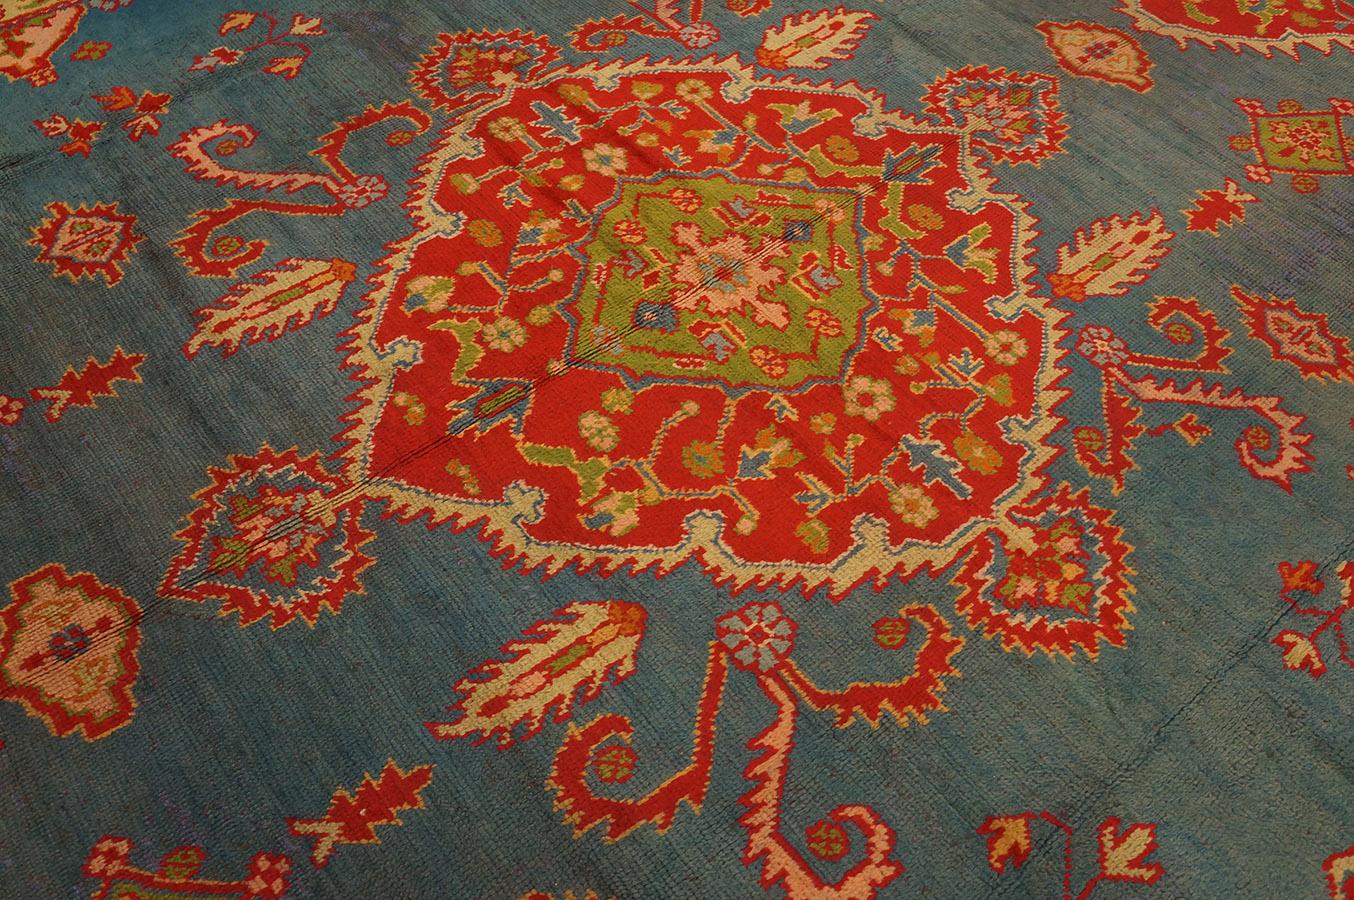 Late 19th Century Turkish Oushak Carpet ( 11' 2'' x 13' 1'' - 340 x 398 cm ) For Sale 7